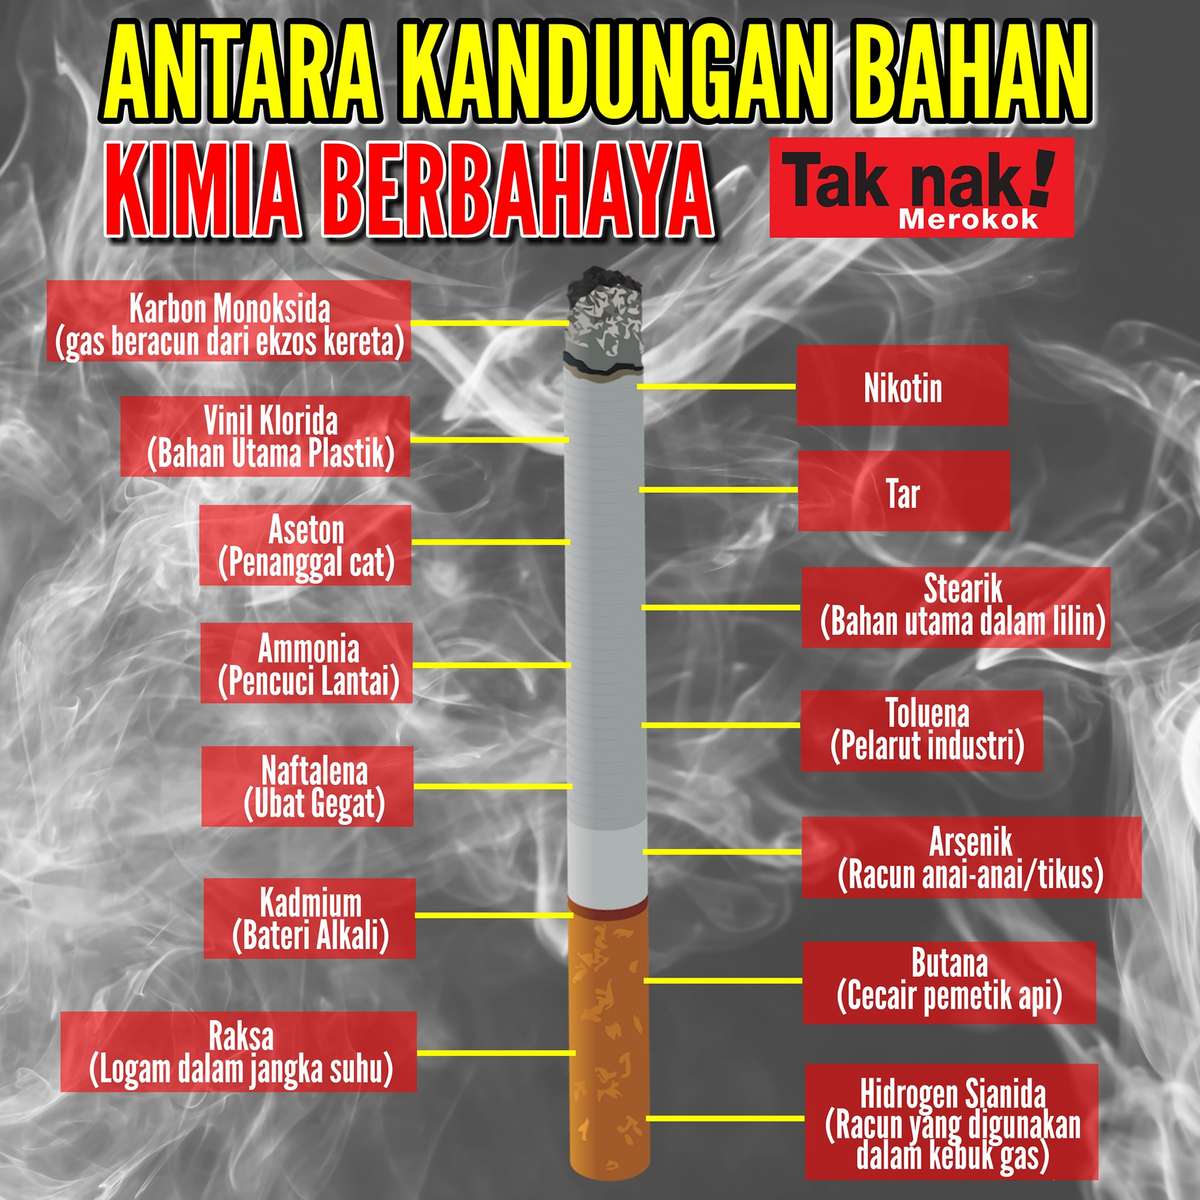 Merokok Tobak pussel online från foto